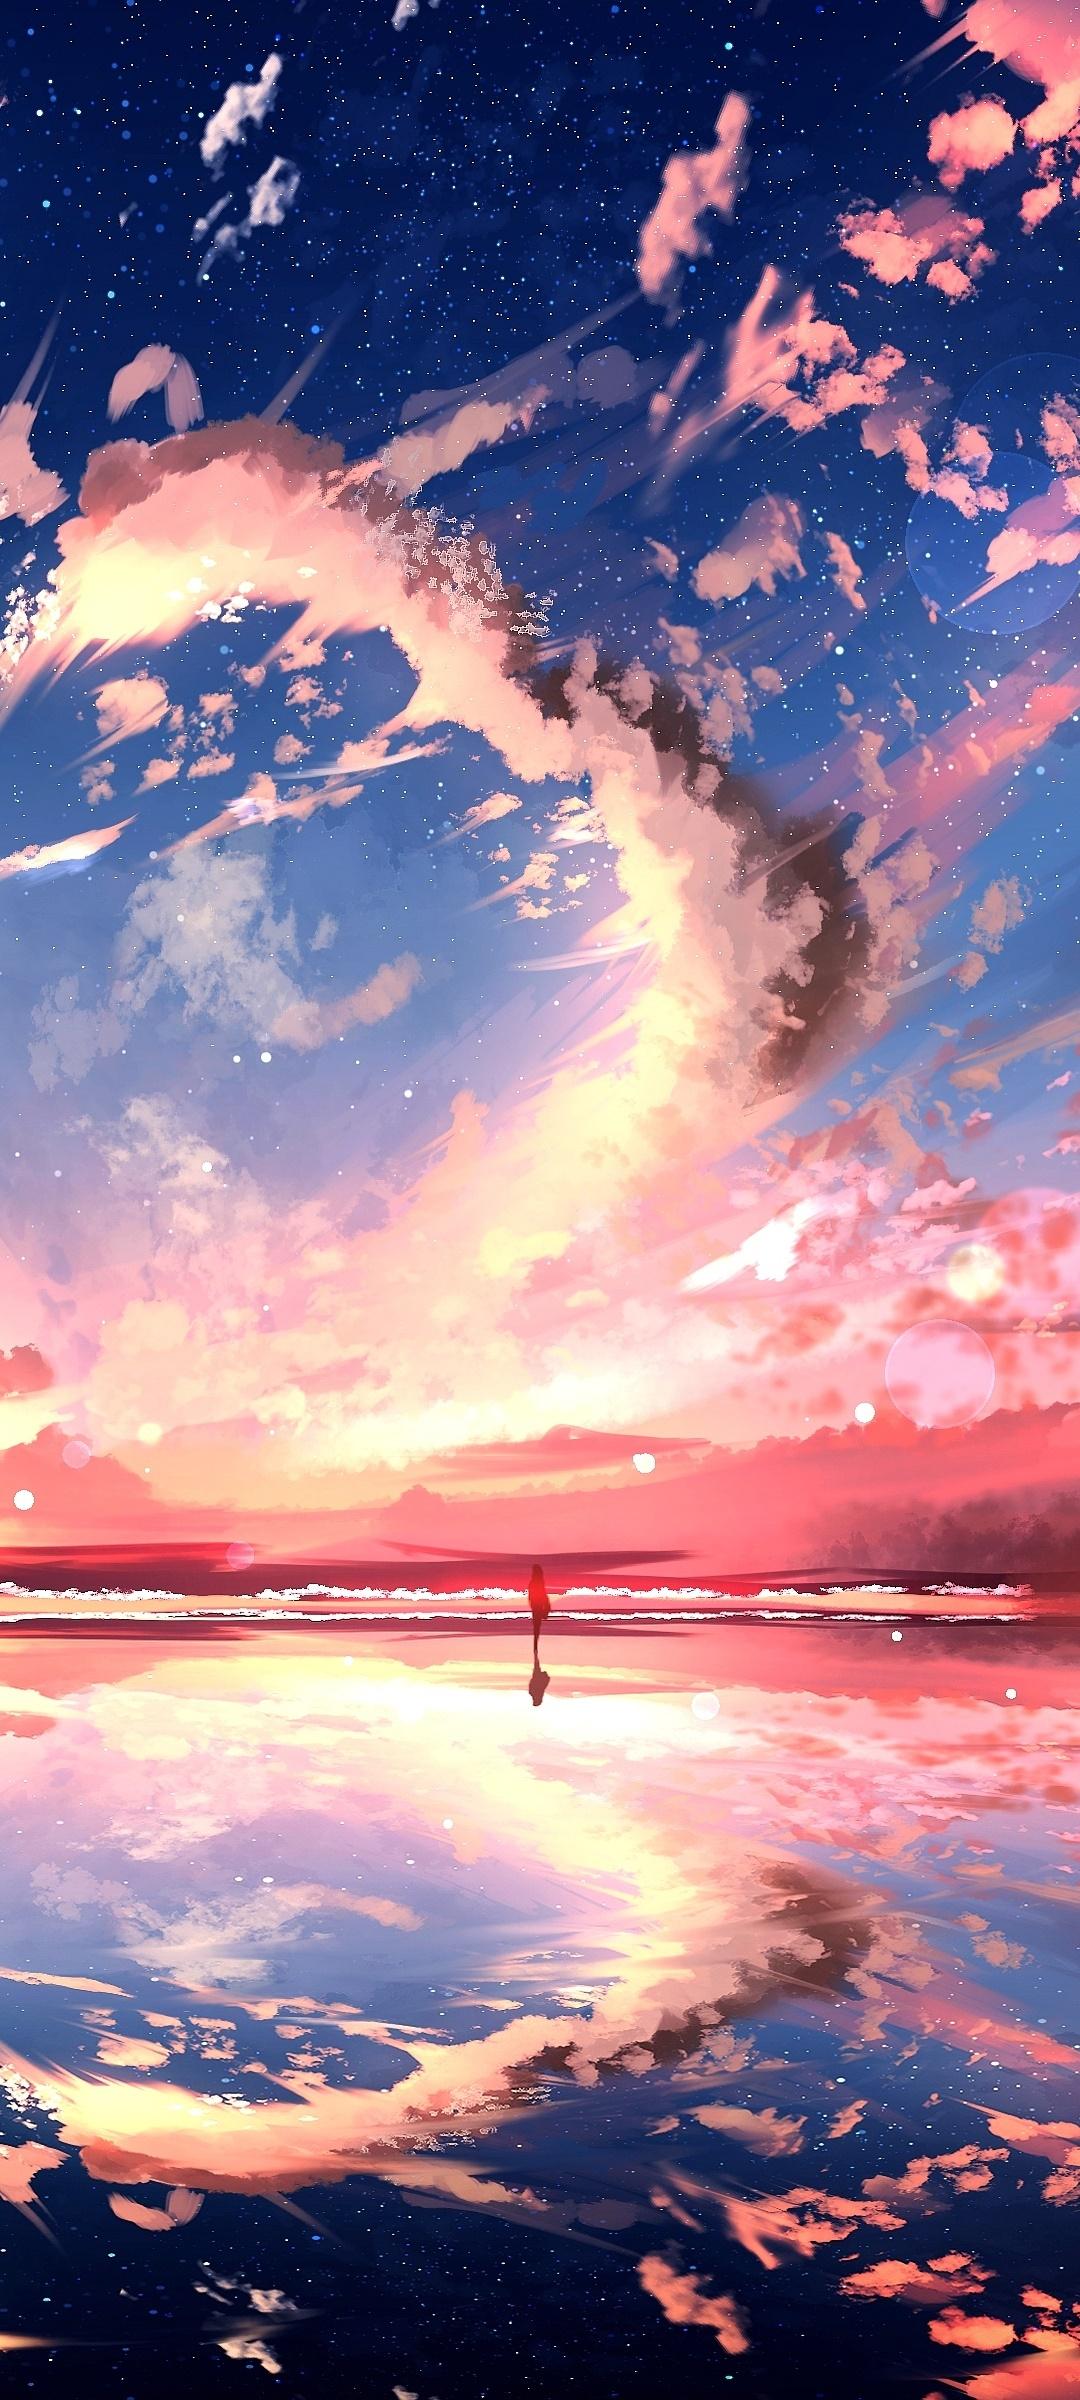 Anime Sky Phone Wallpapers - Top Free Anime Sky Phone Backgrounds ...